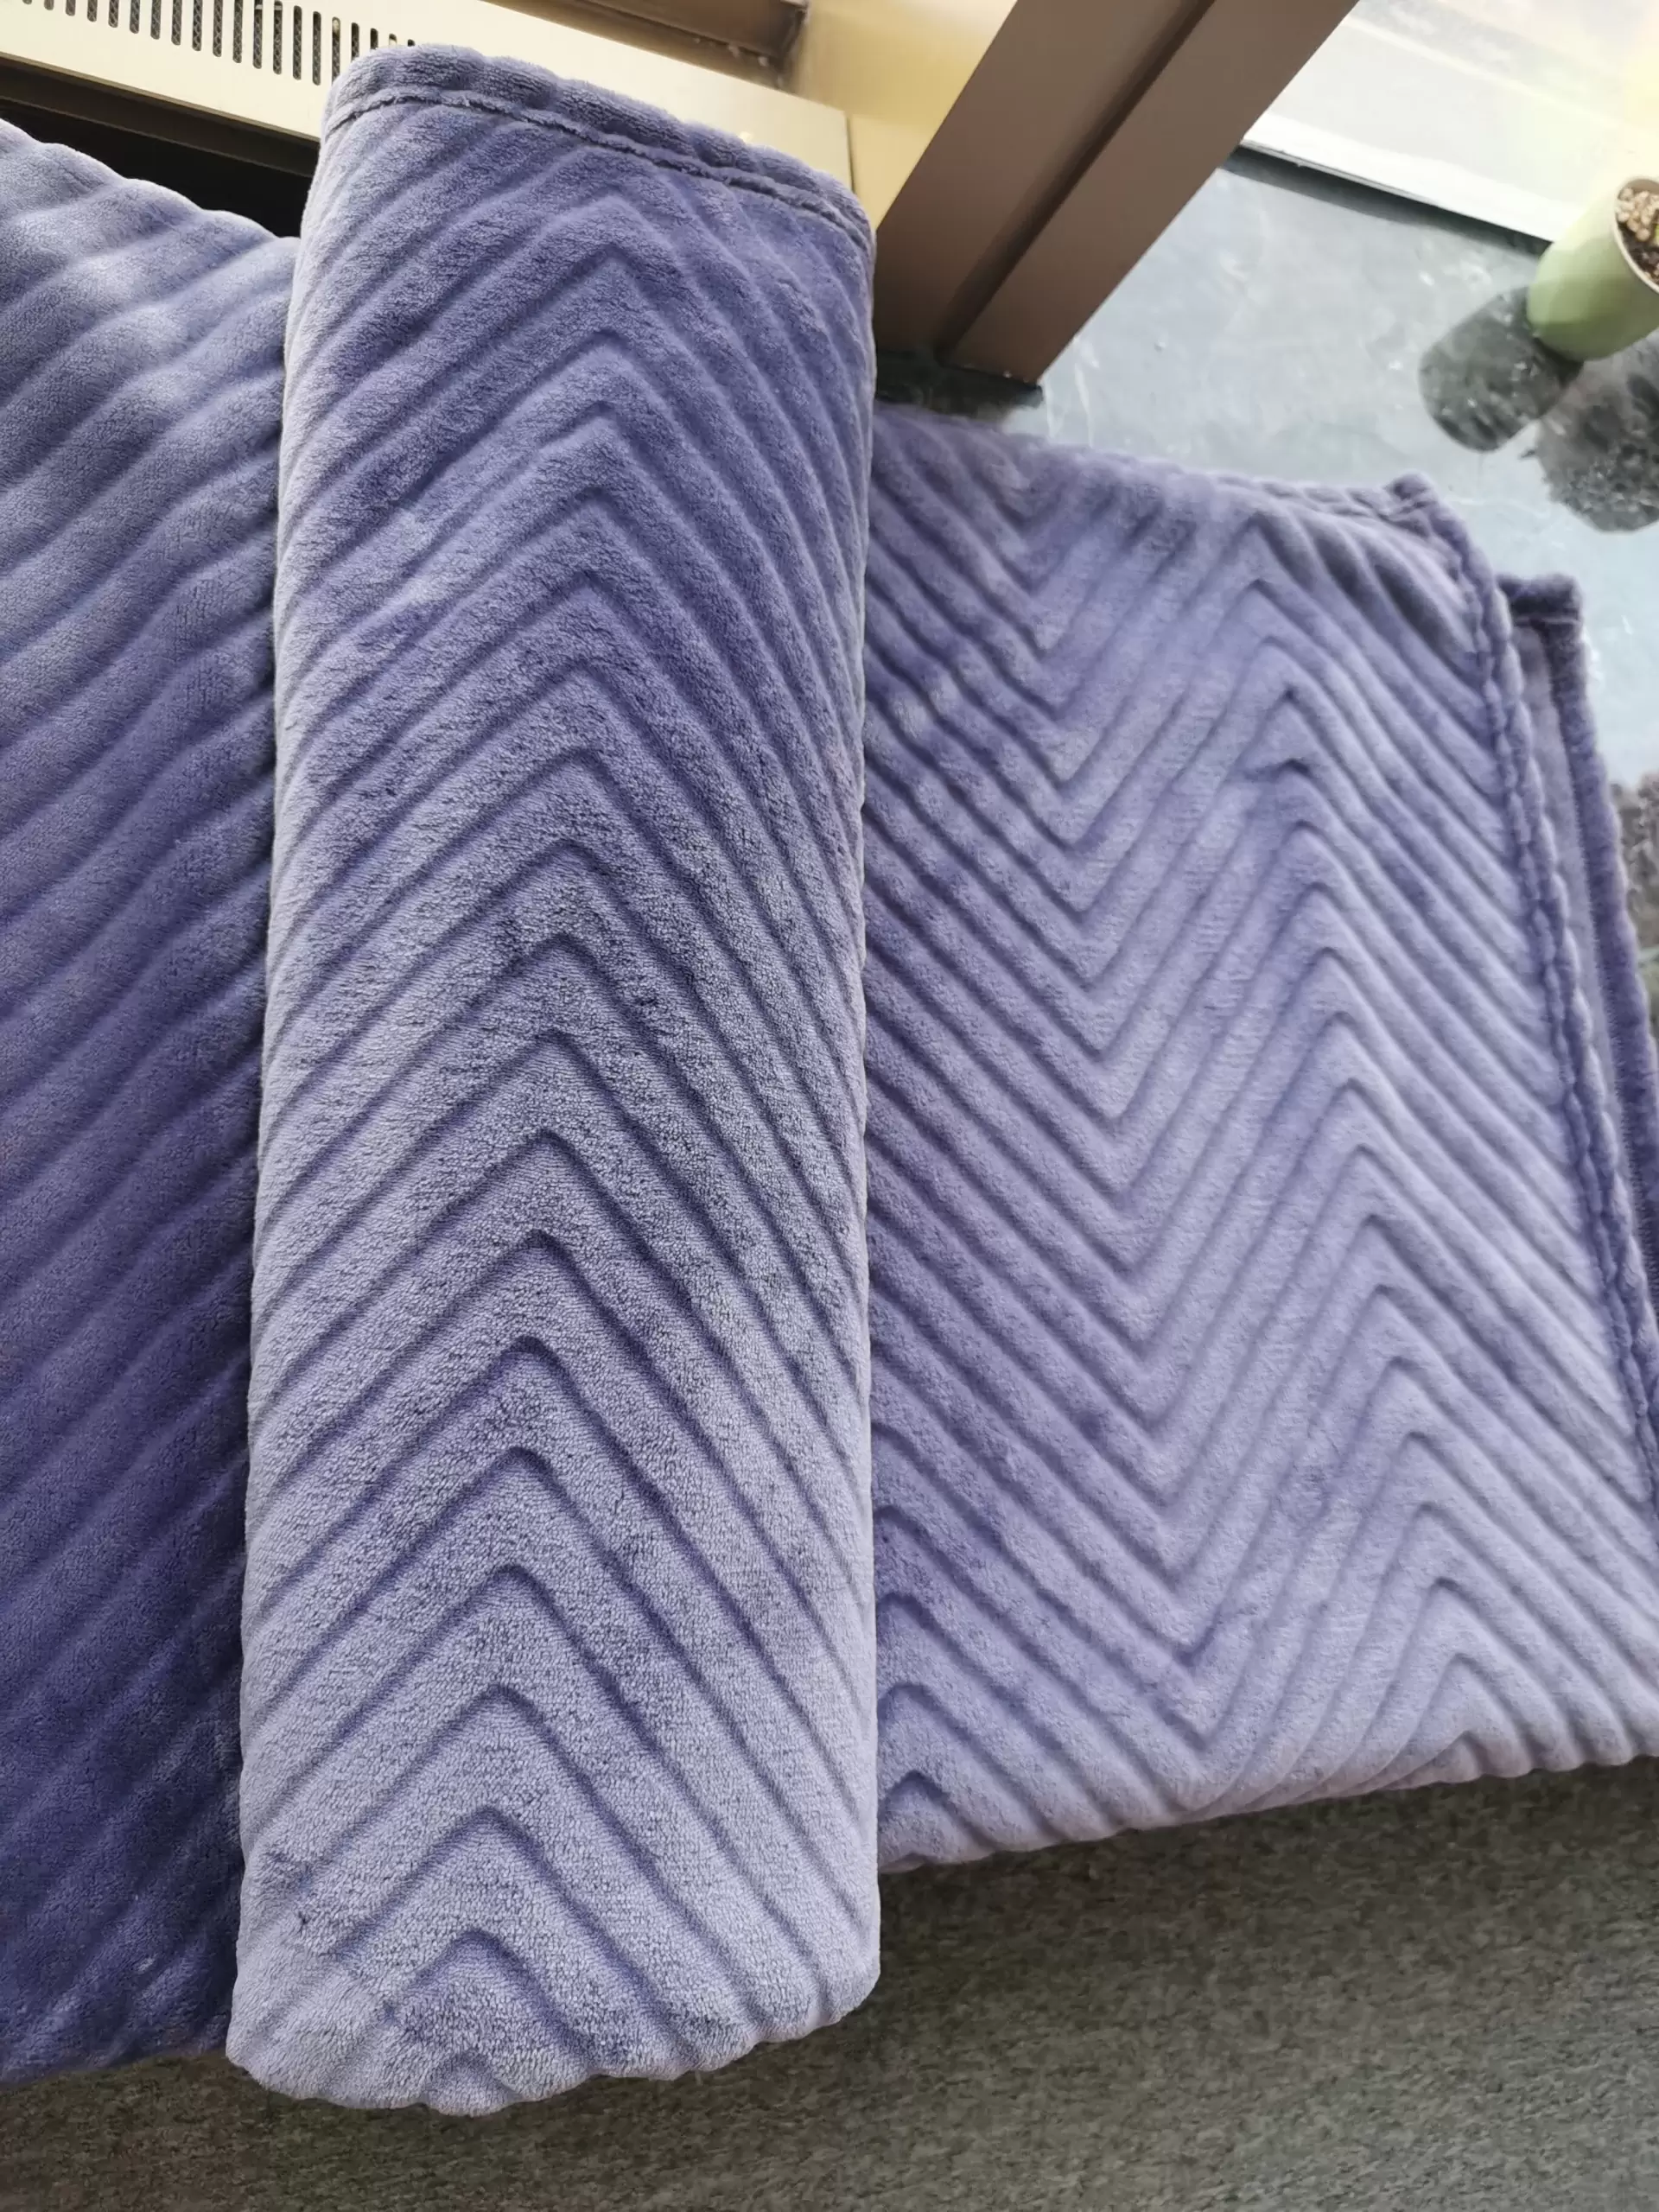 3D cutting flannel throw/blanket